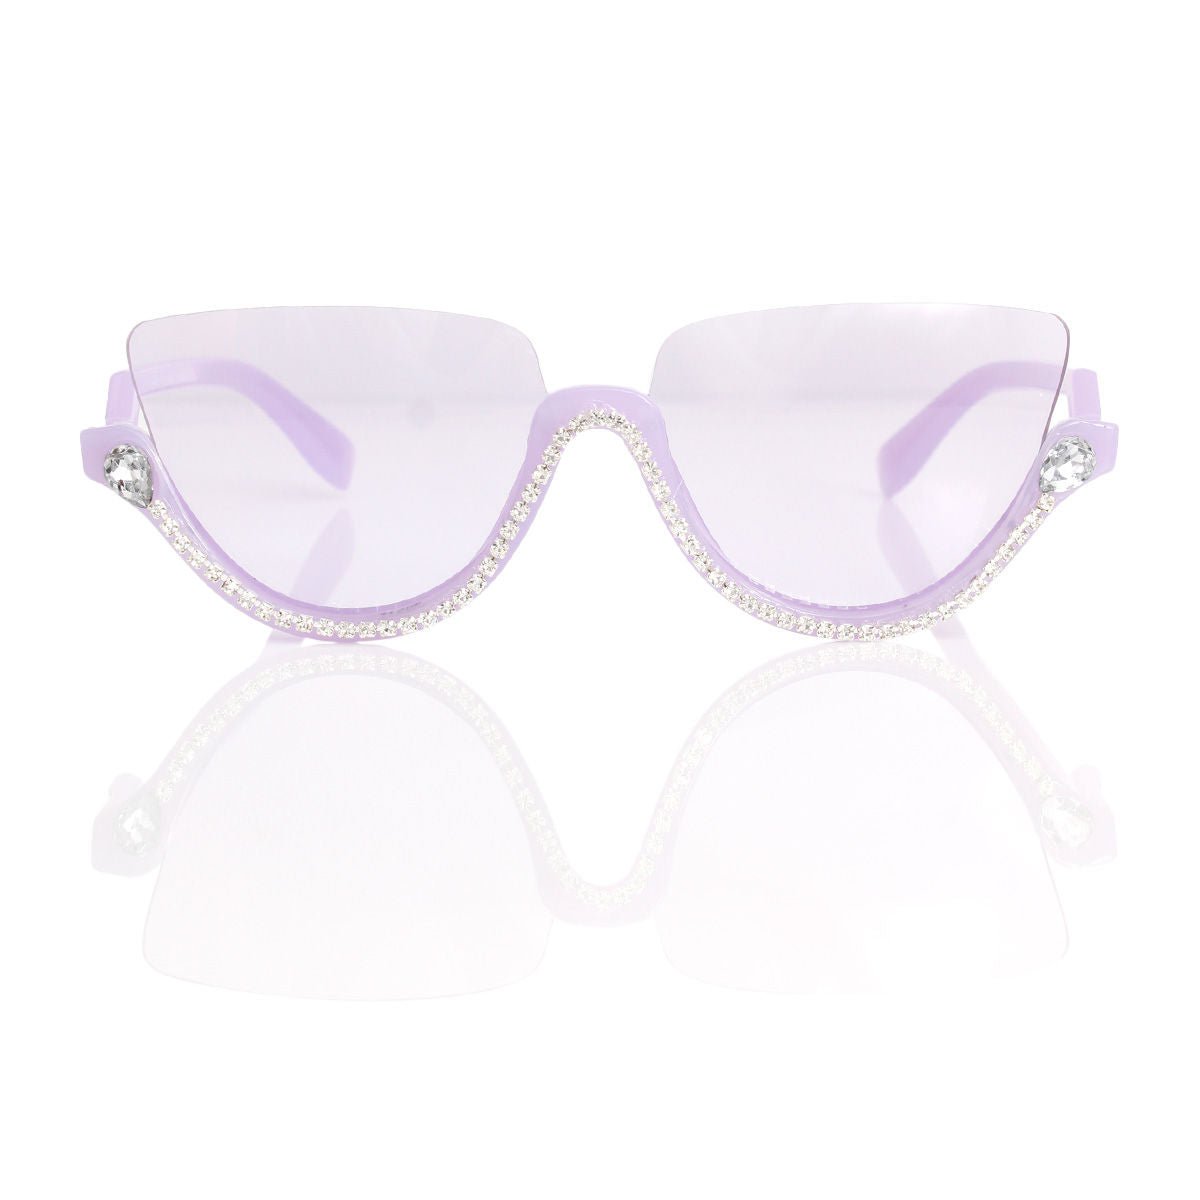 Sunglasses Half Frame Purple Eyewear for Women - Bae Apparel